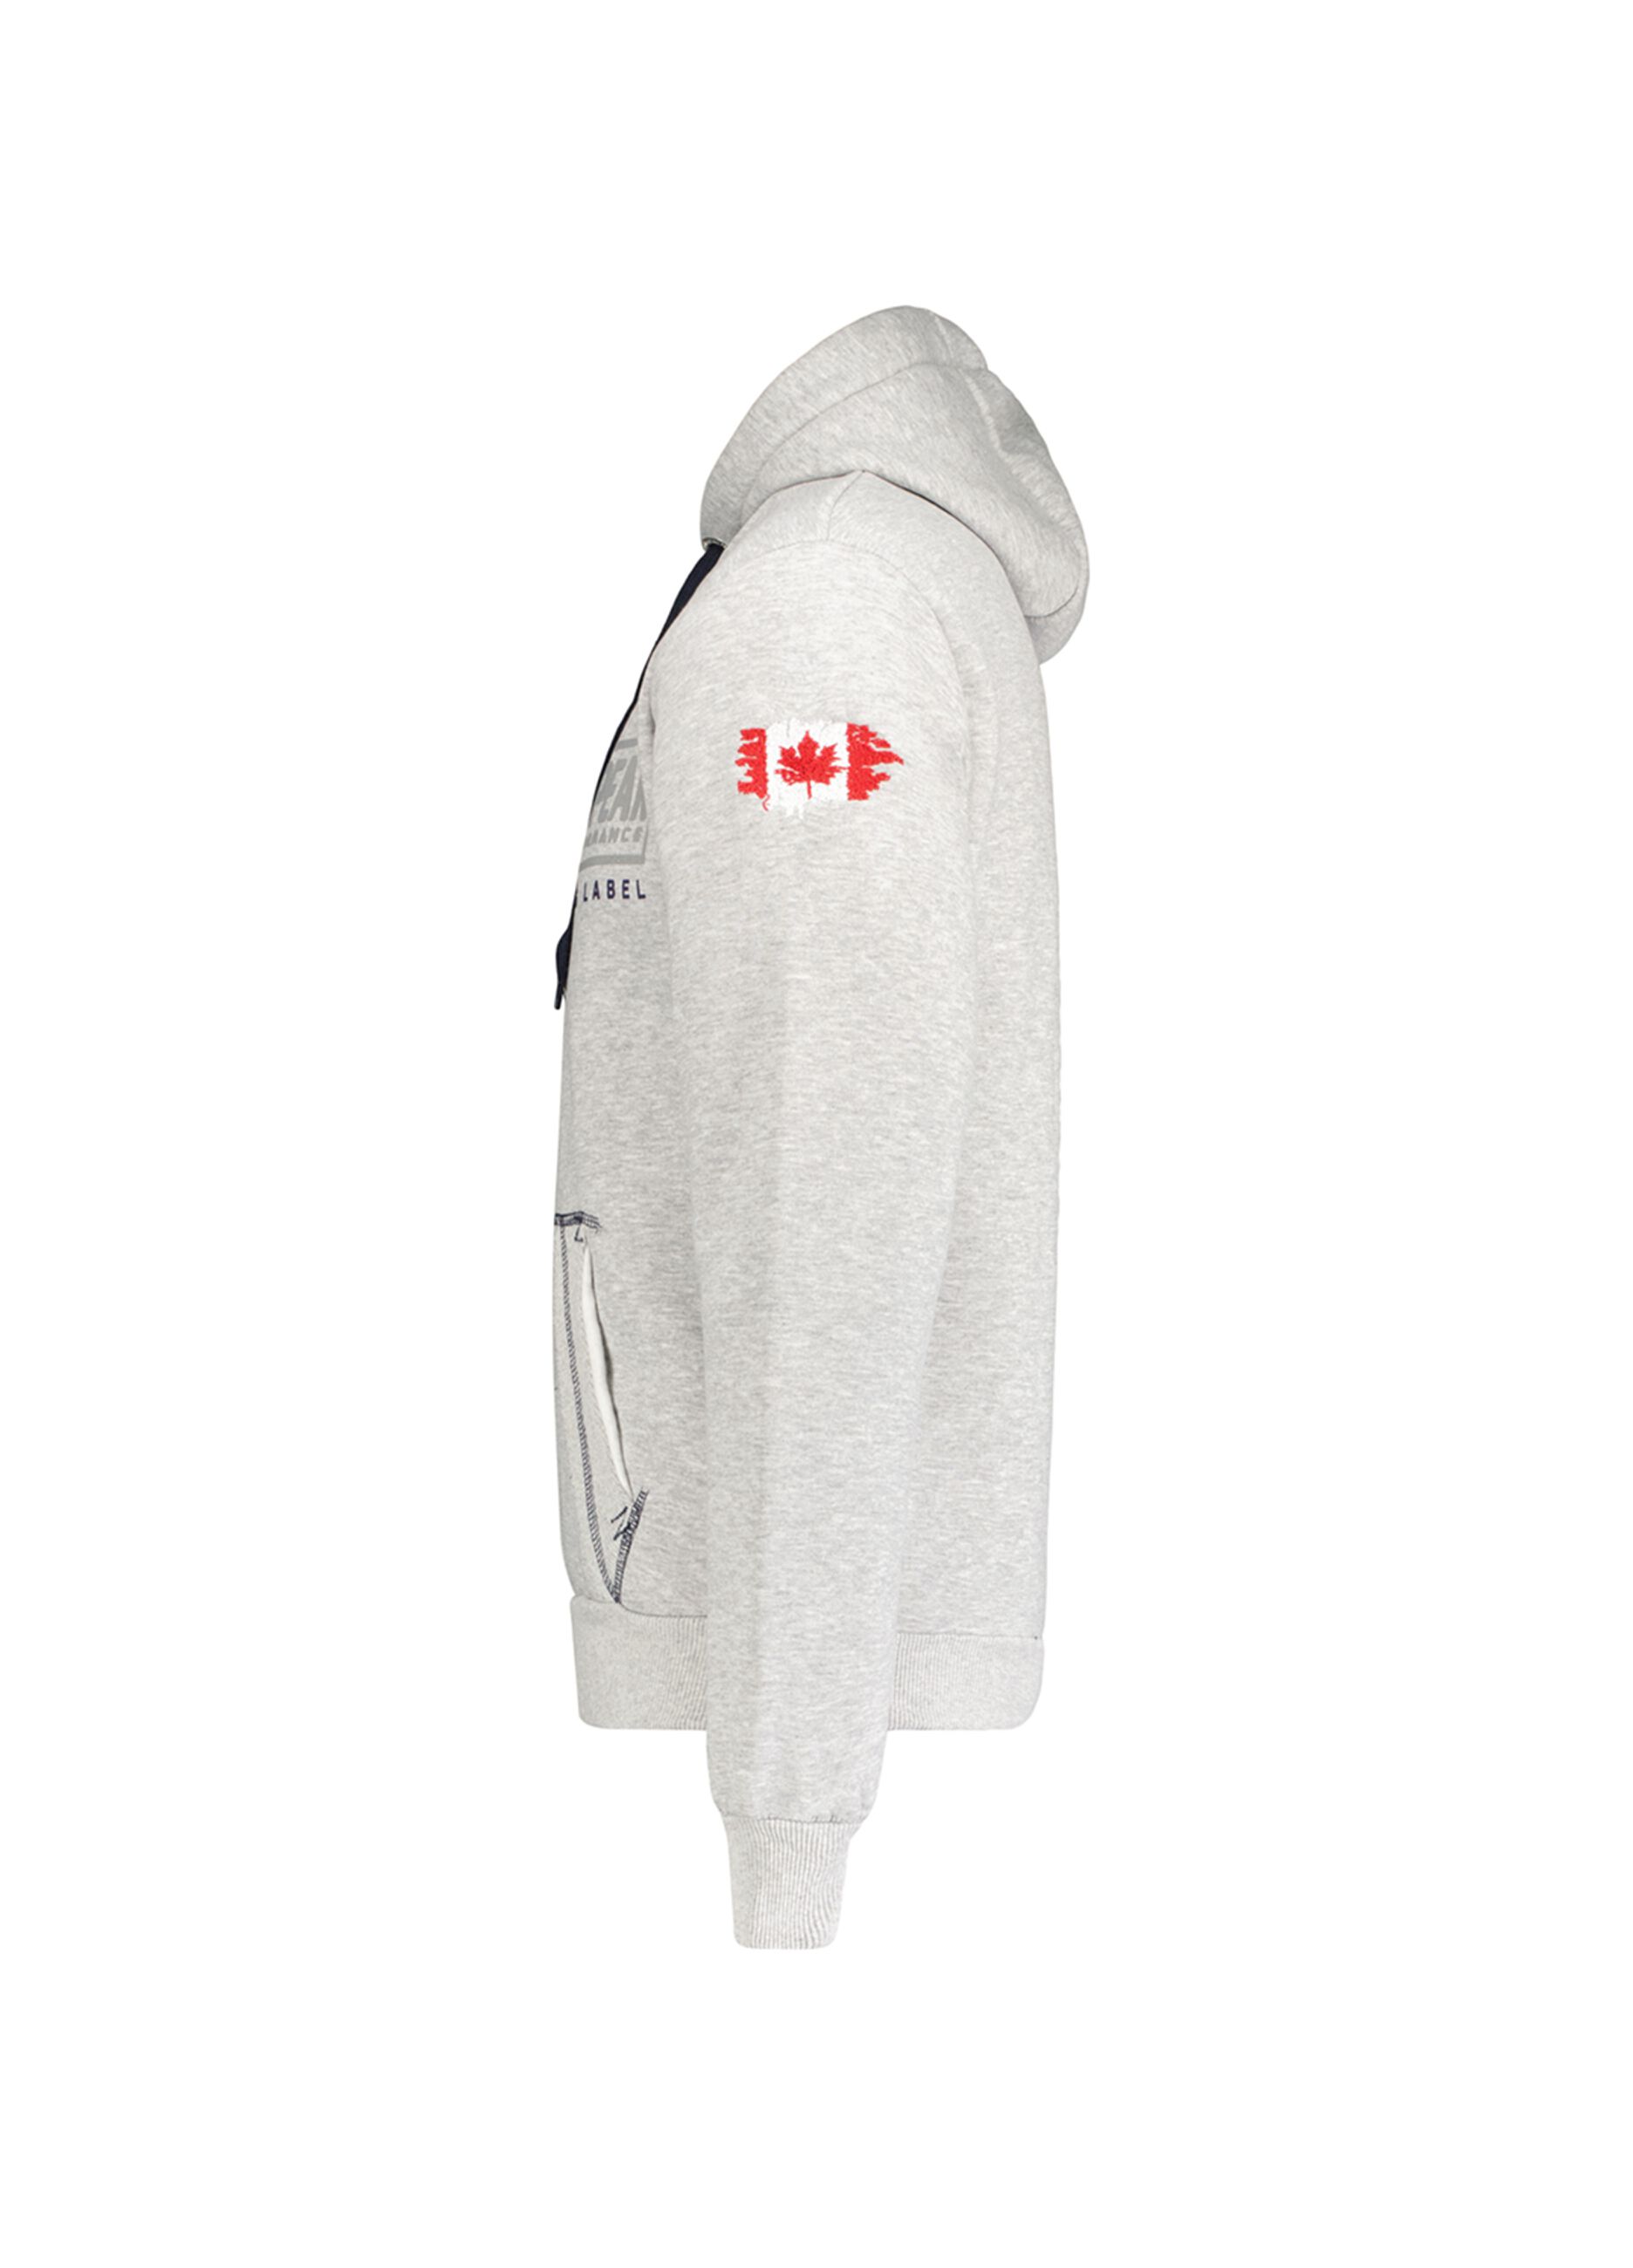 Sweatshirt with hood and Canadian Peak print